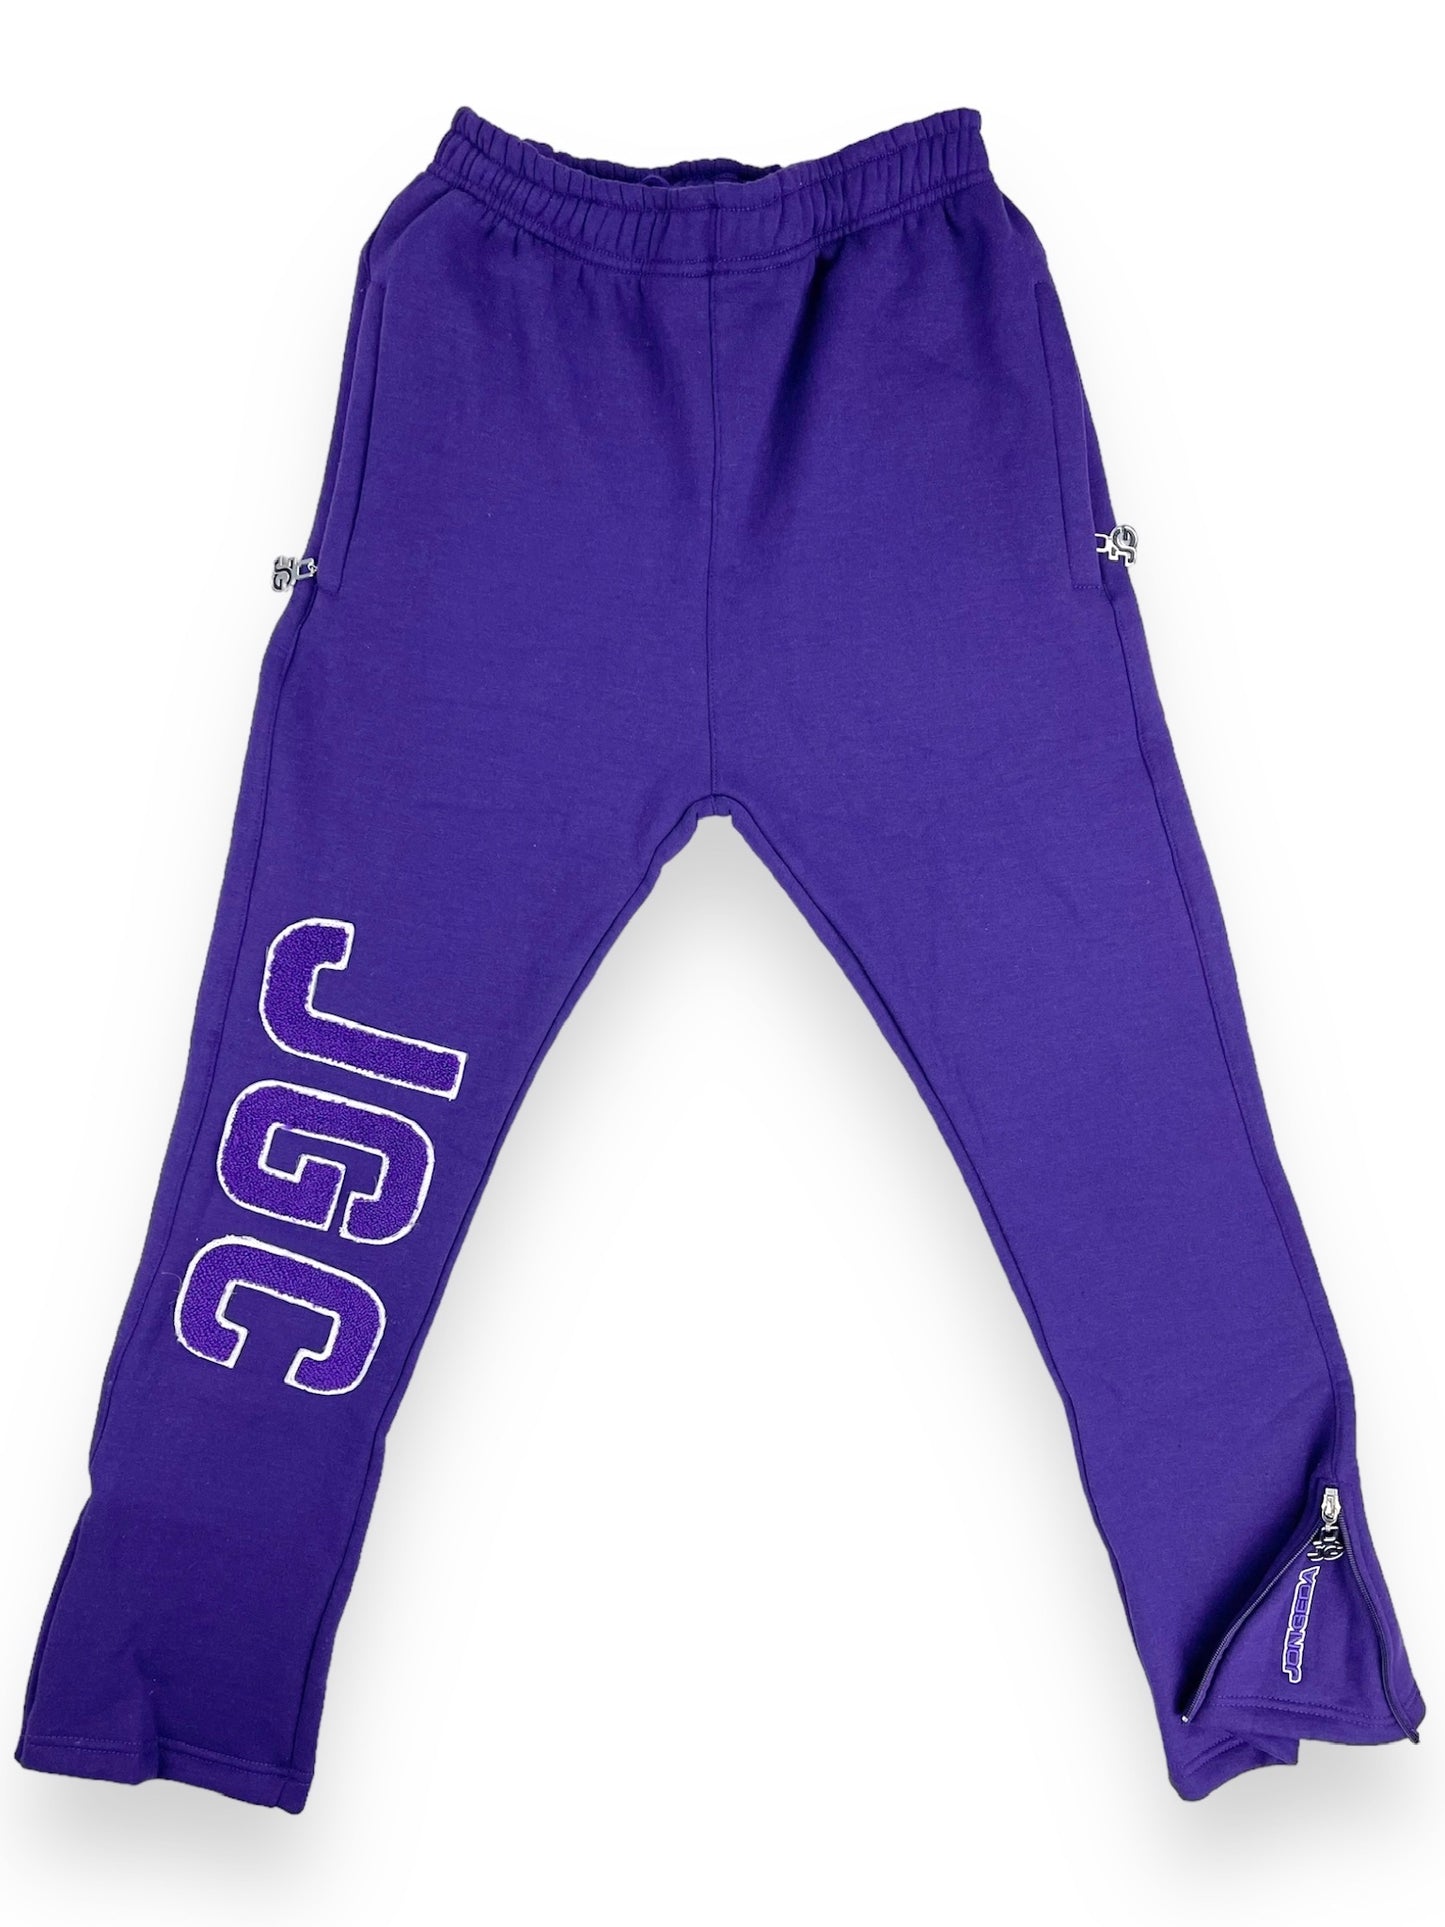 Jon Geda Pullover Sweatsuit (Purple)